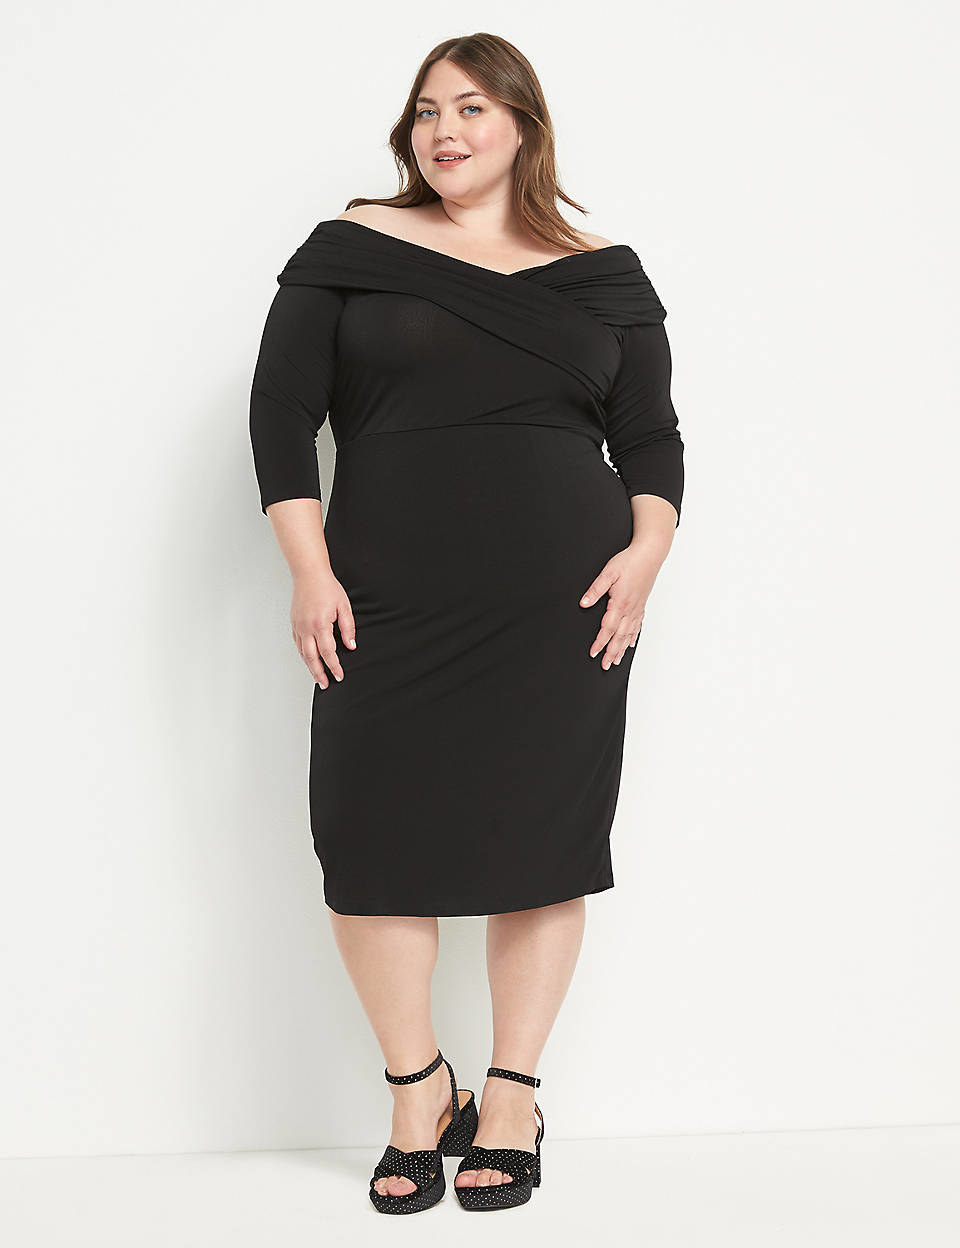 model wearing the off-the-shoulder dress in black